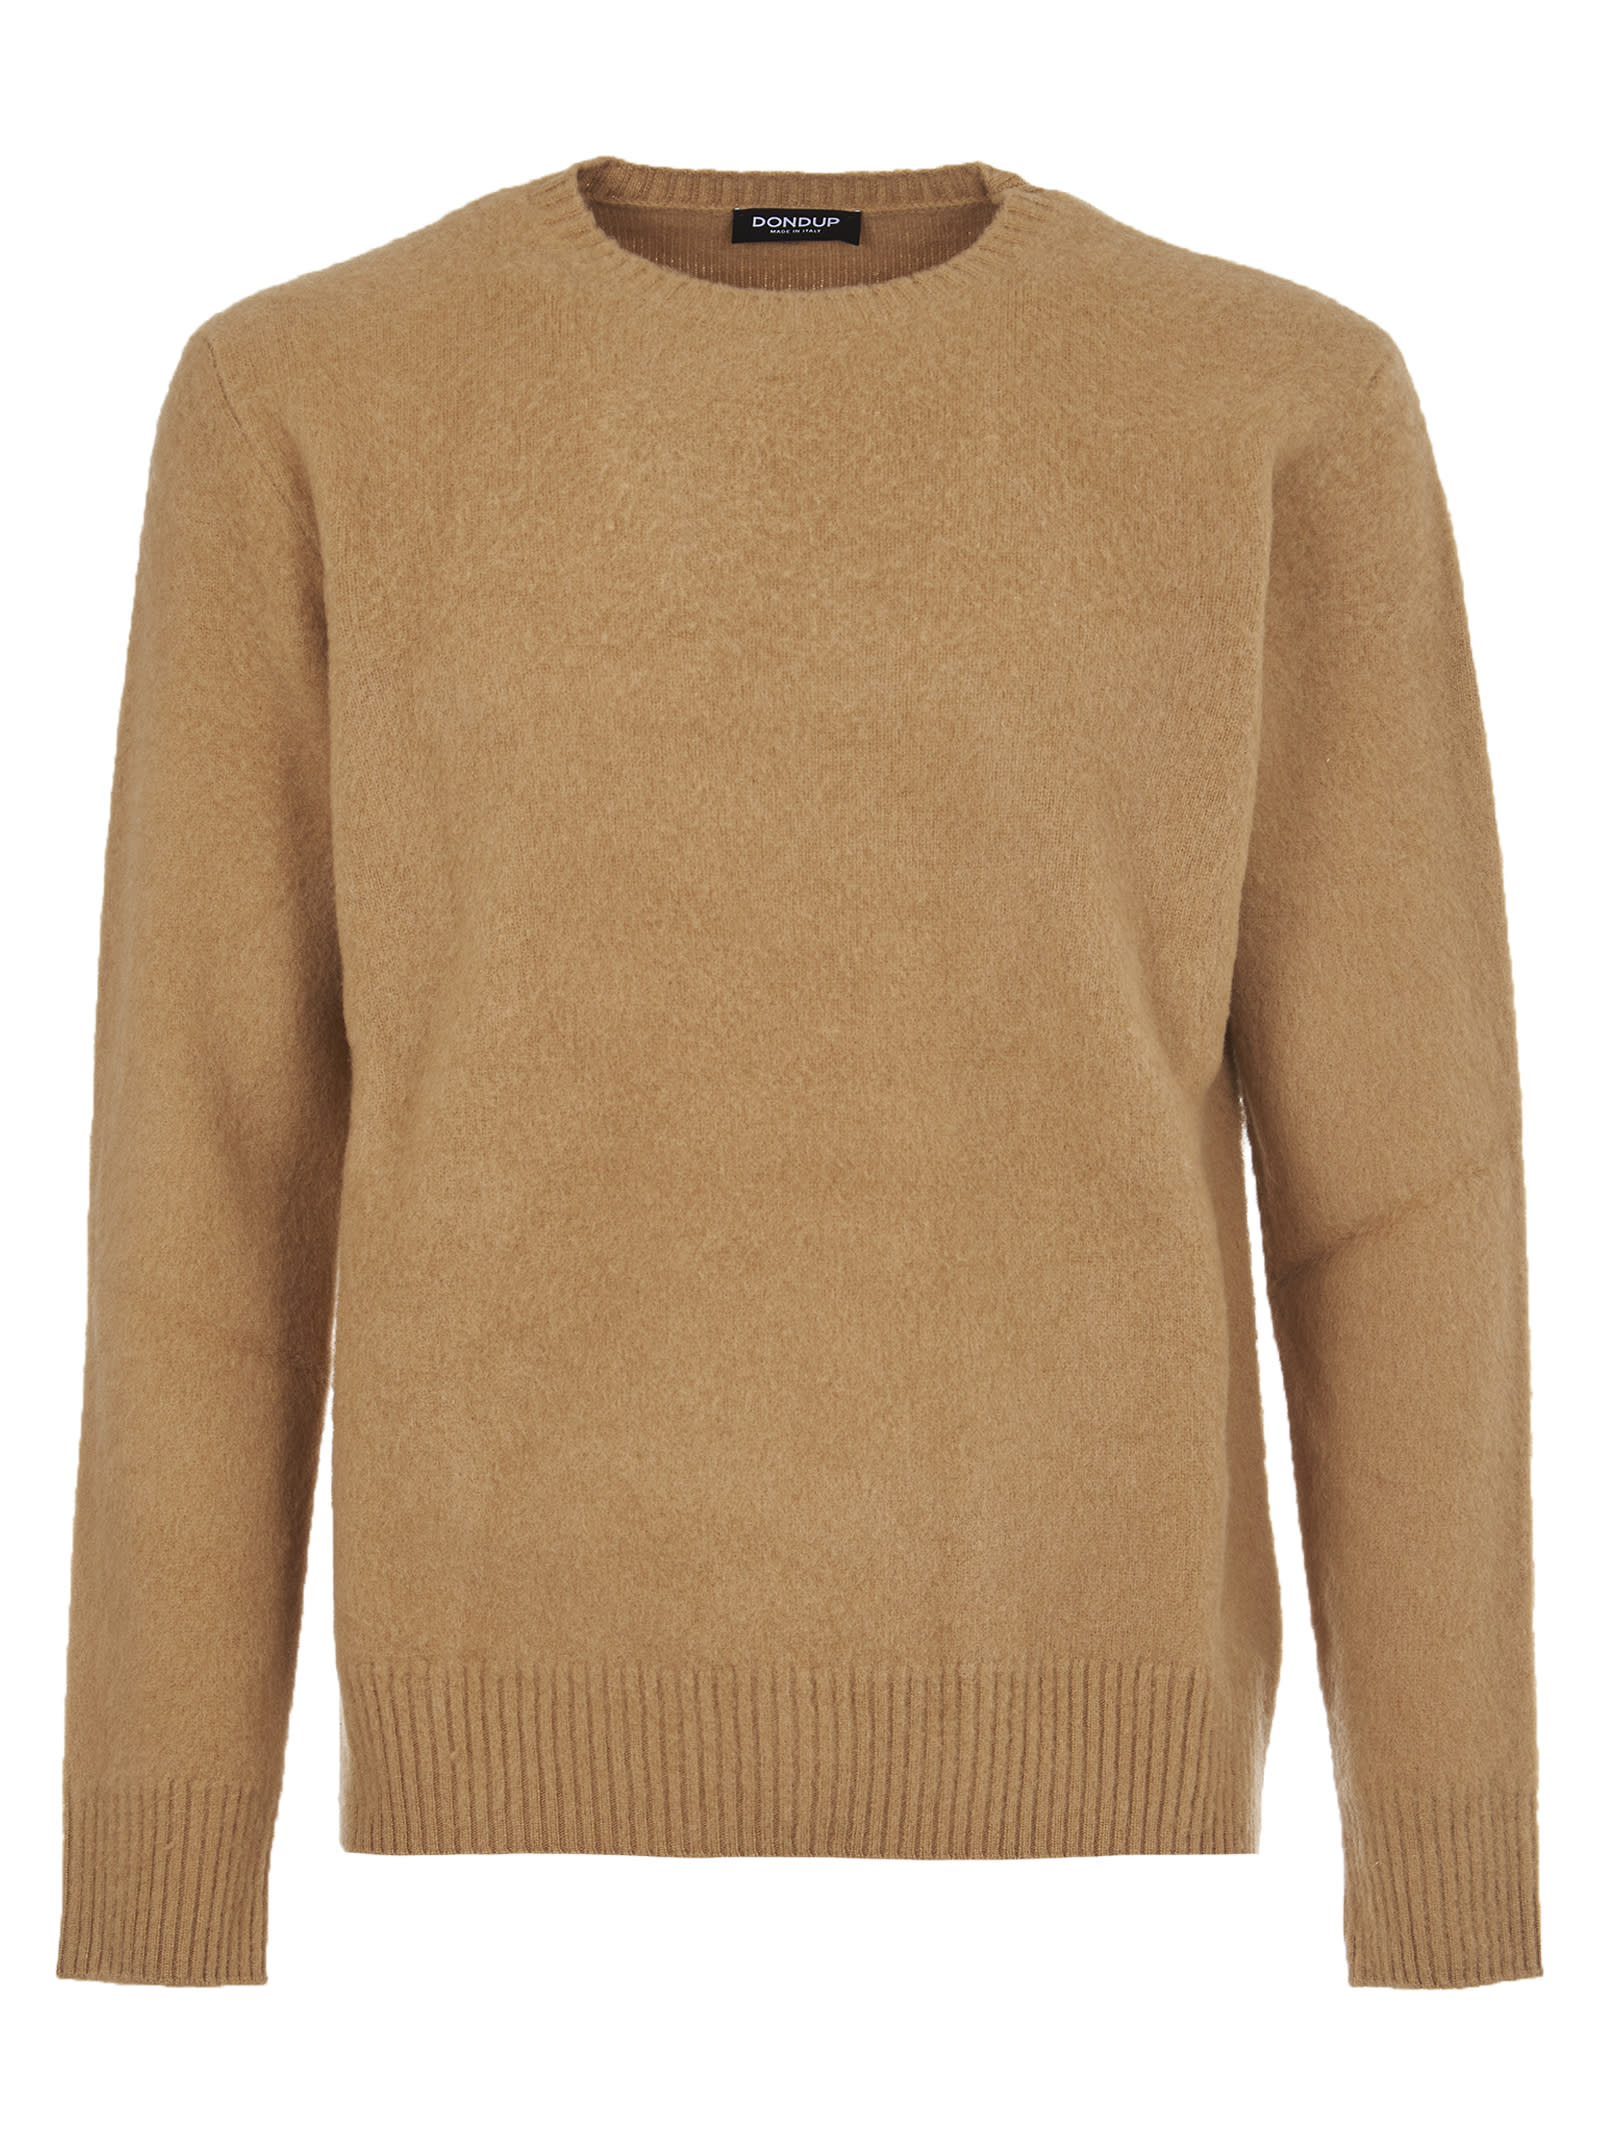 Dondup Camel Sweater